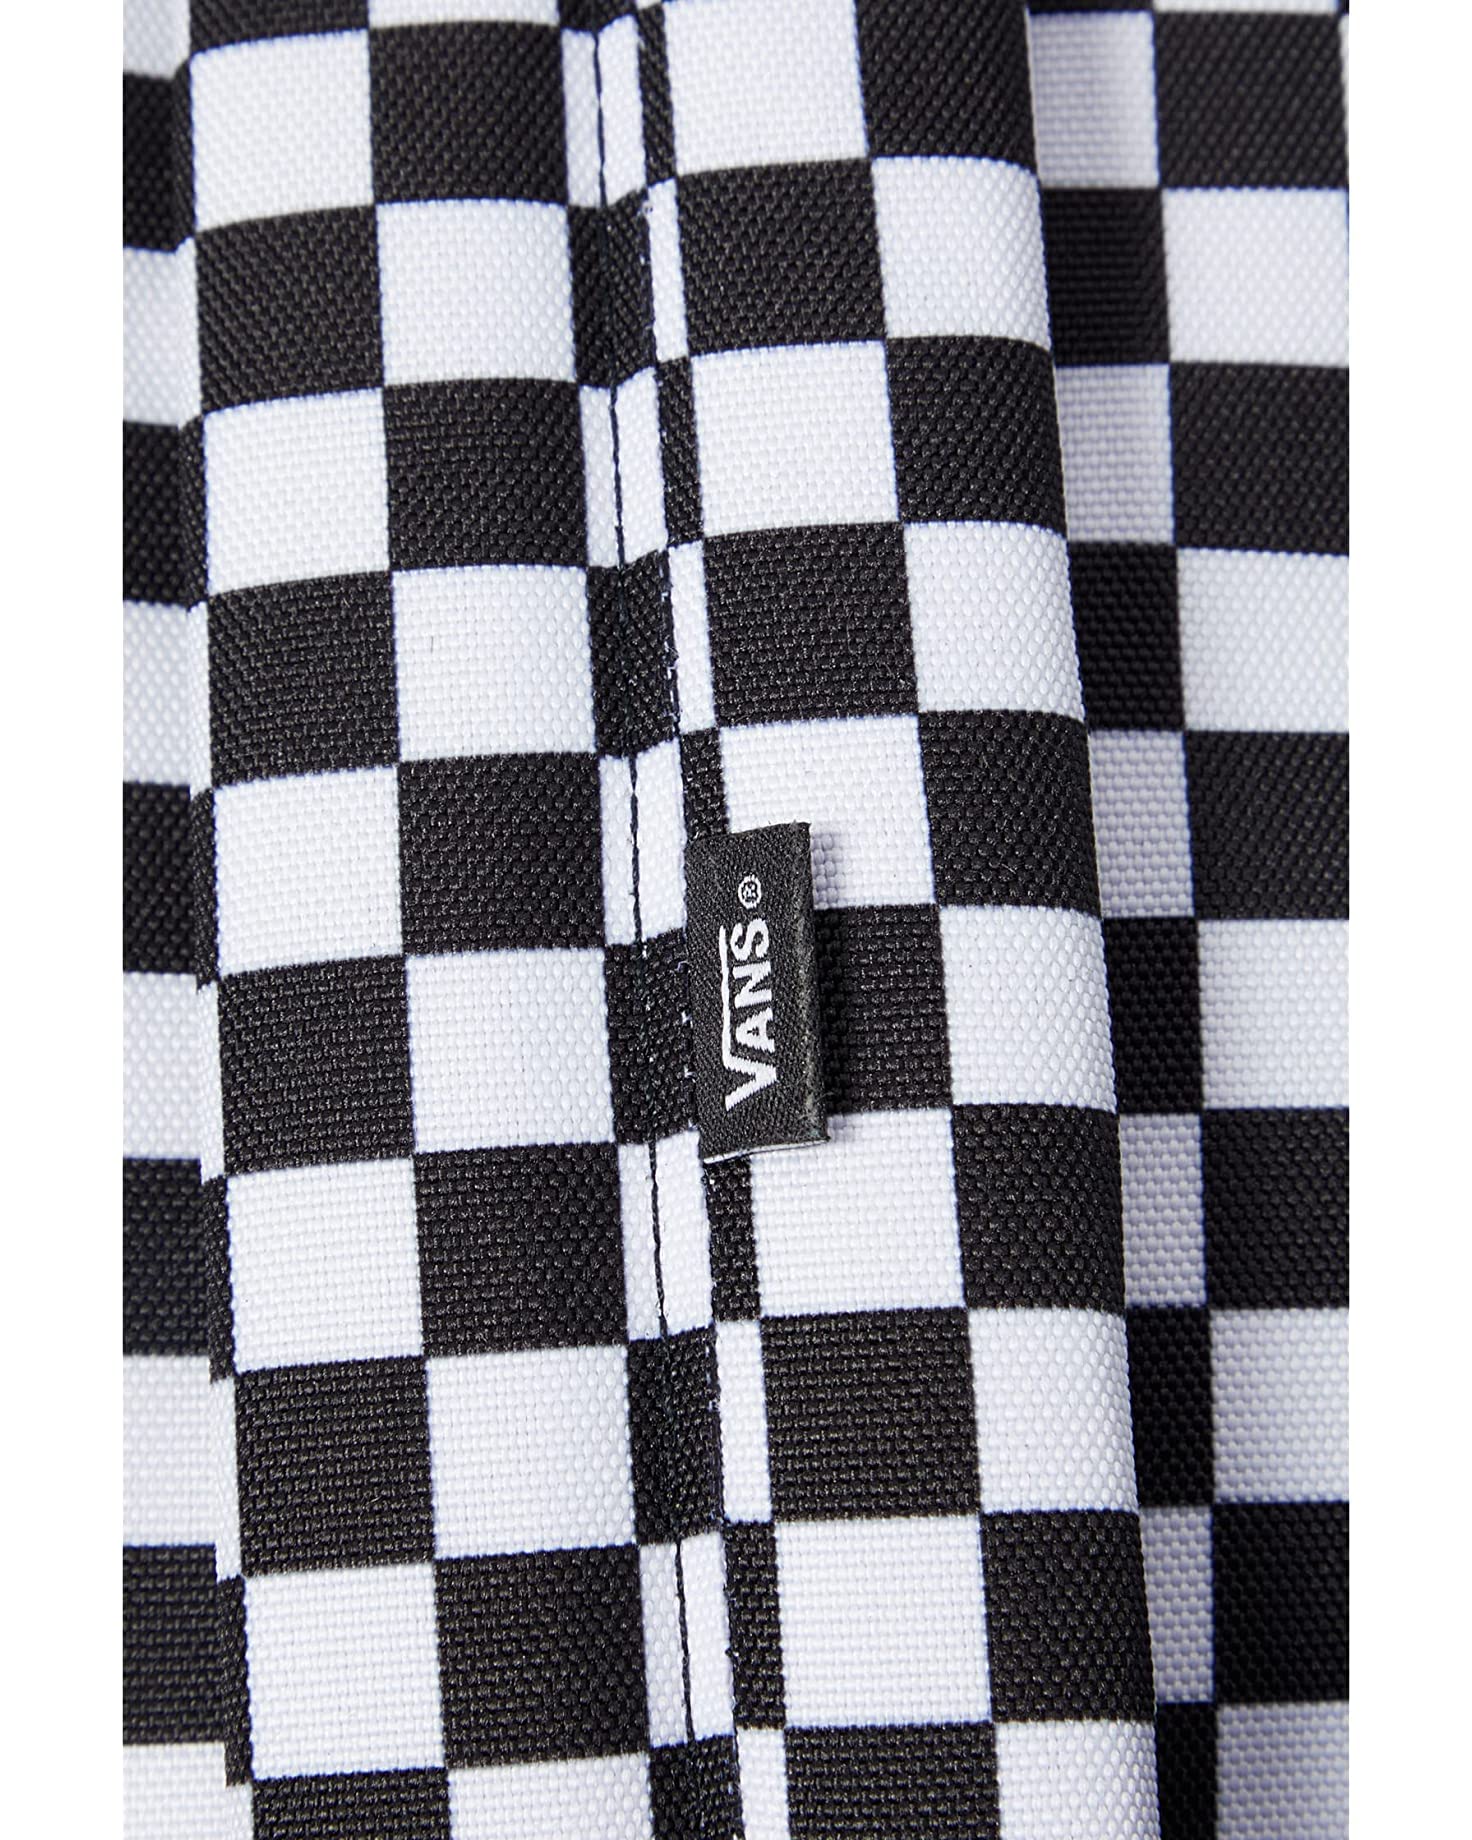 Vans, Old Skool H2O Backpack (Black/White Checkerboard, One Size)